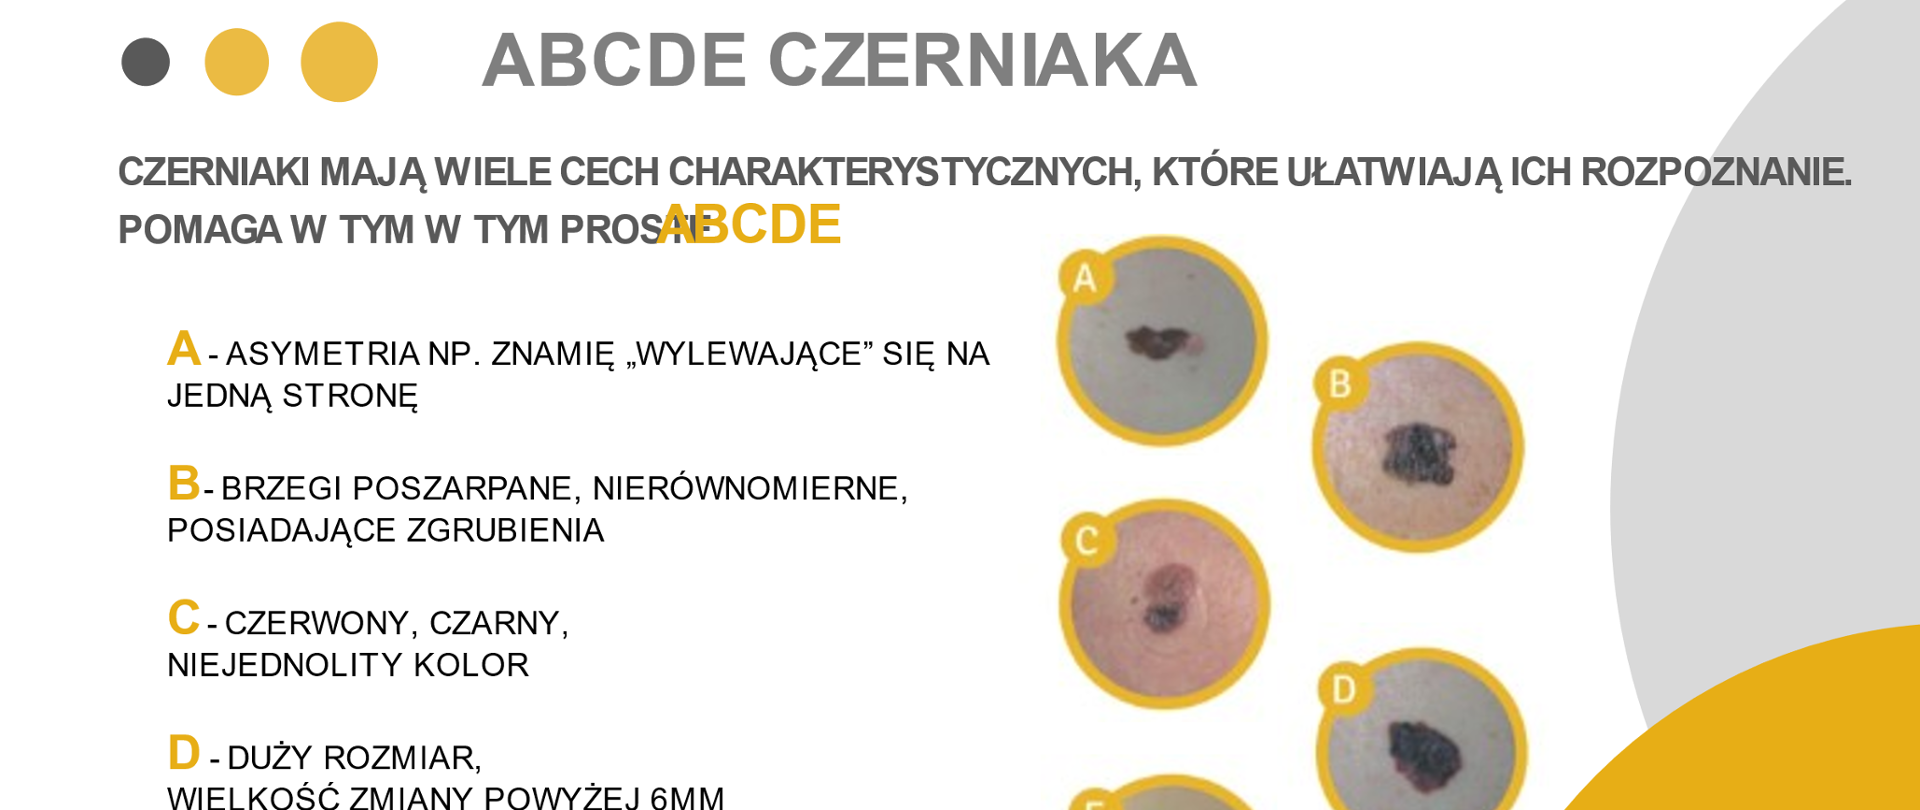 ABCDE_czerniaka